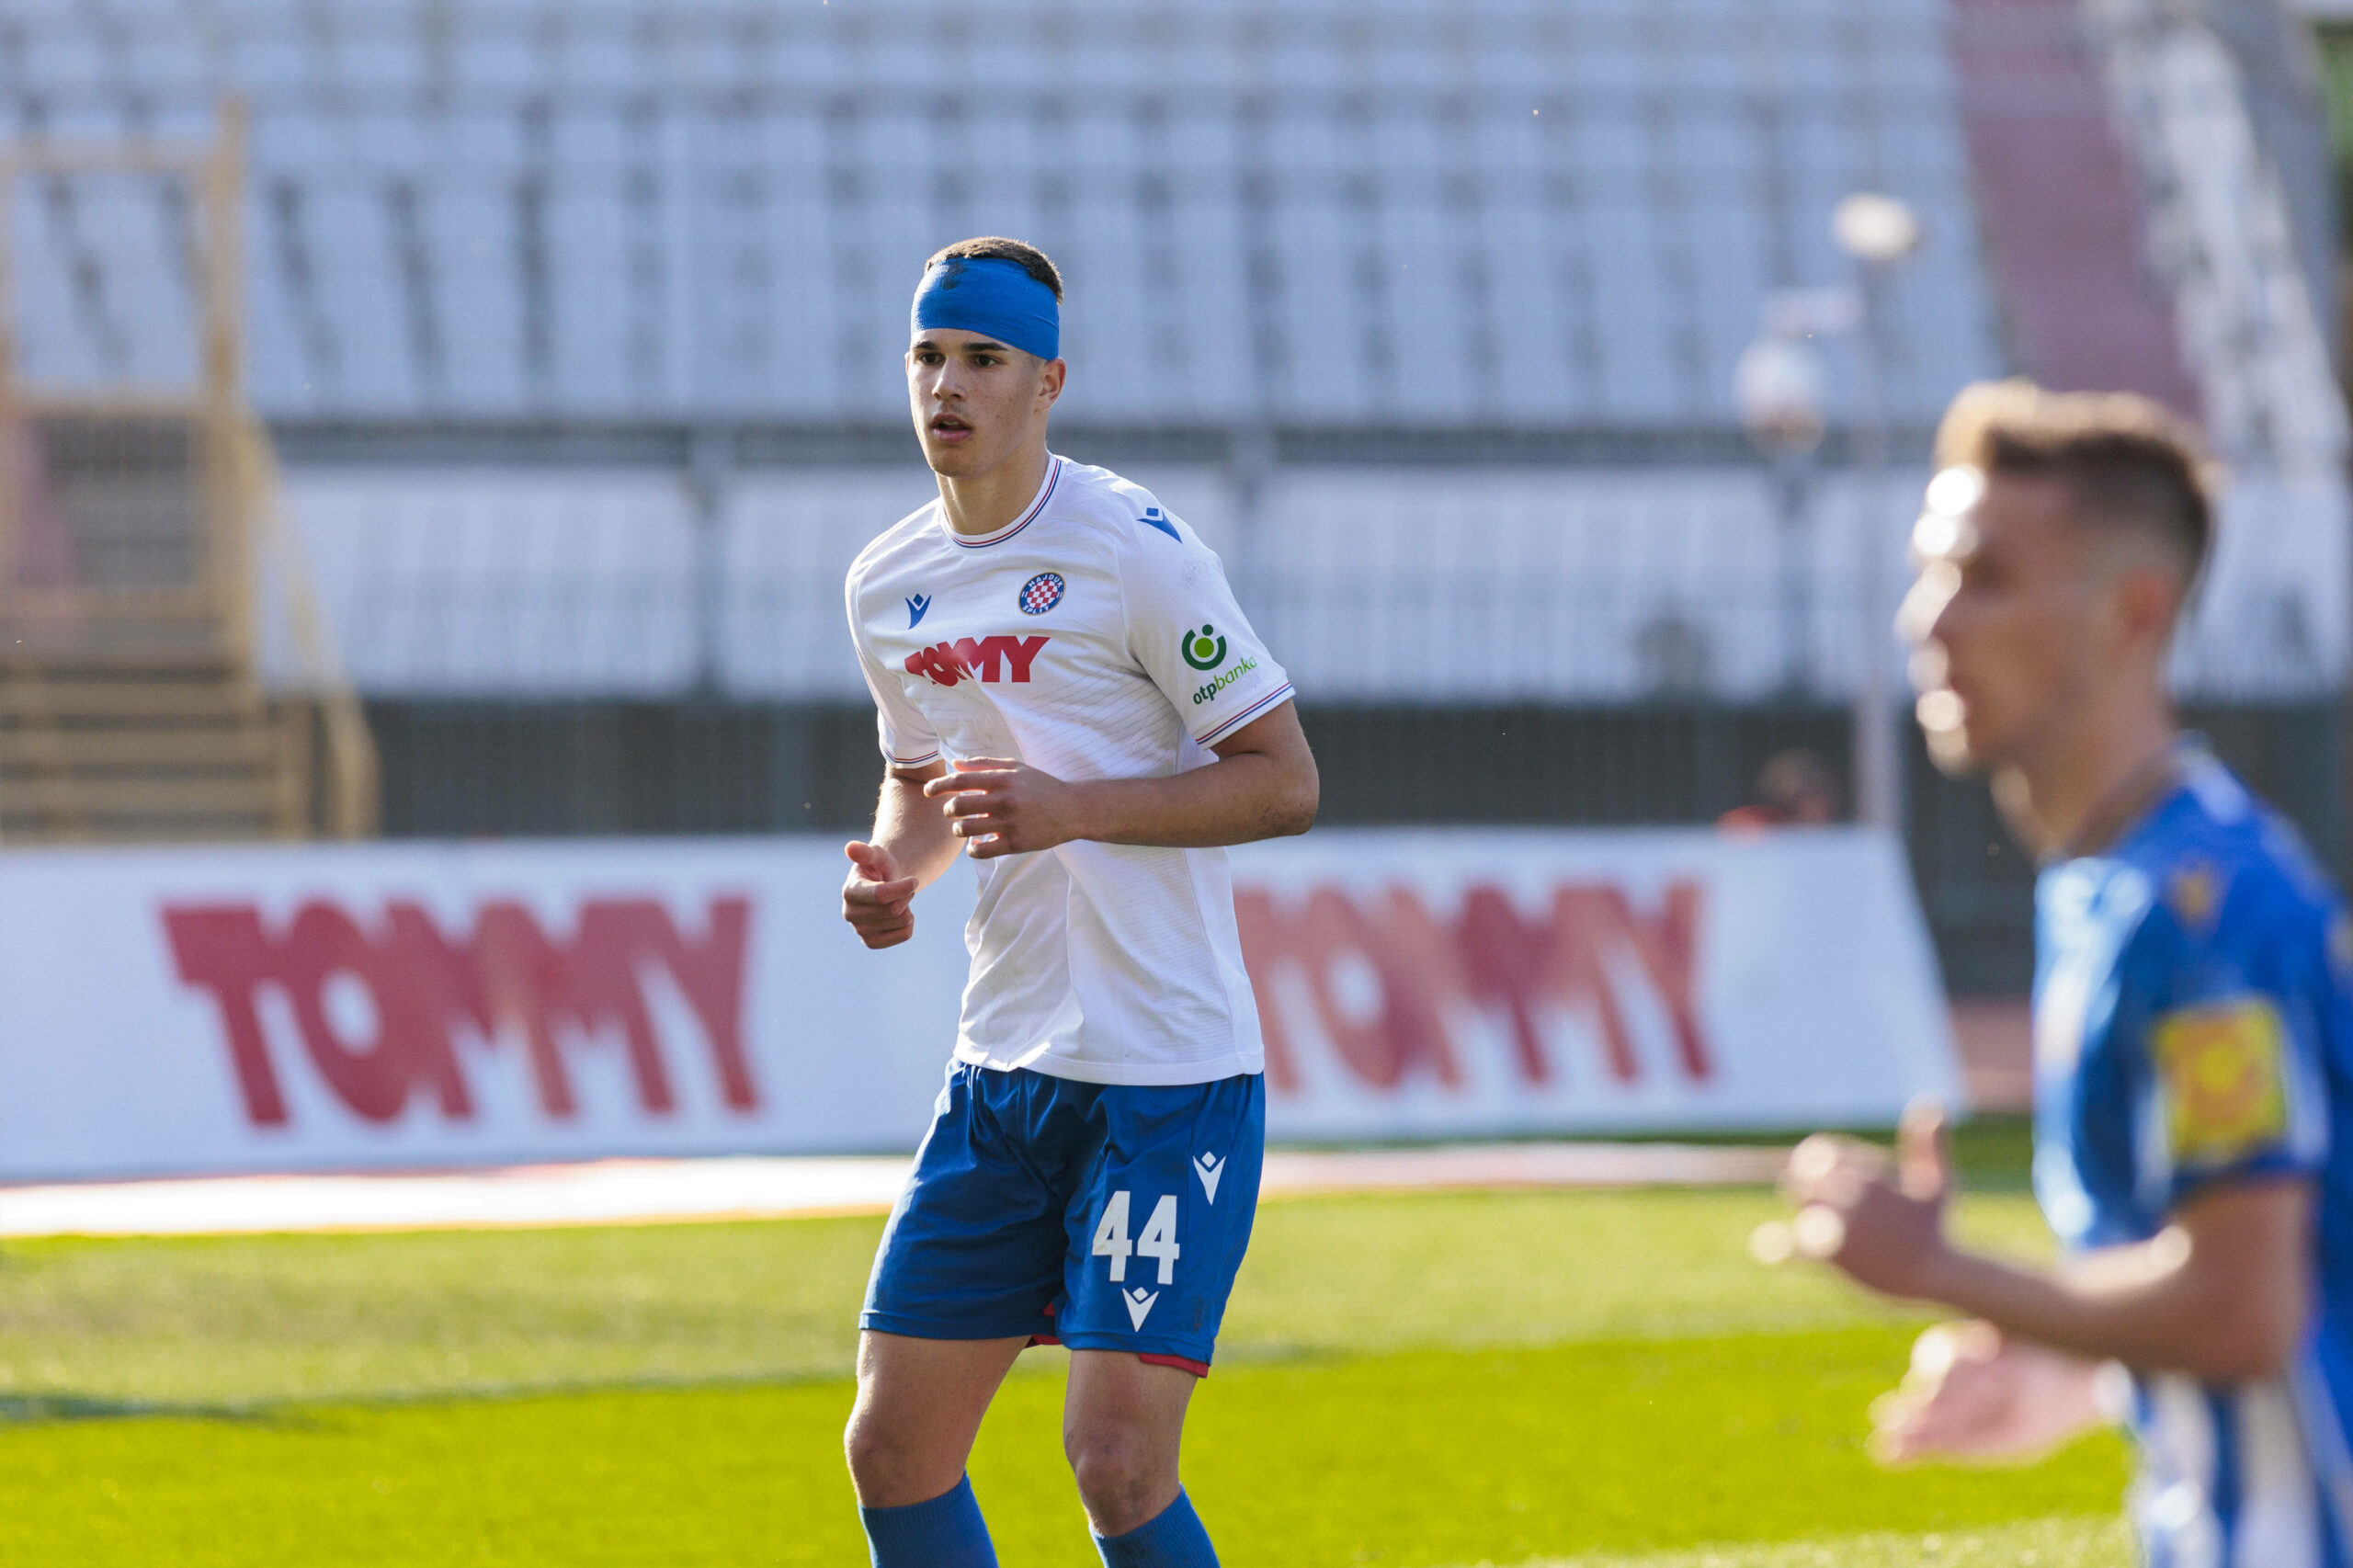 Luka Vušković • Skills & Goals 2023 • Tottenham New Player 